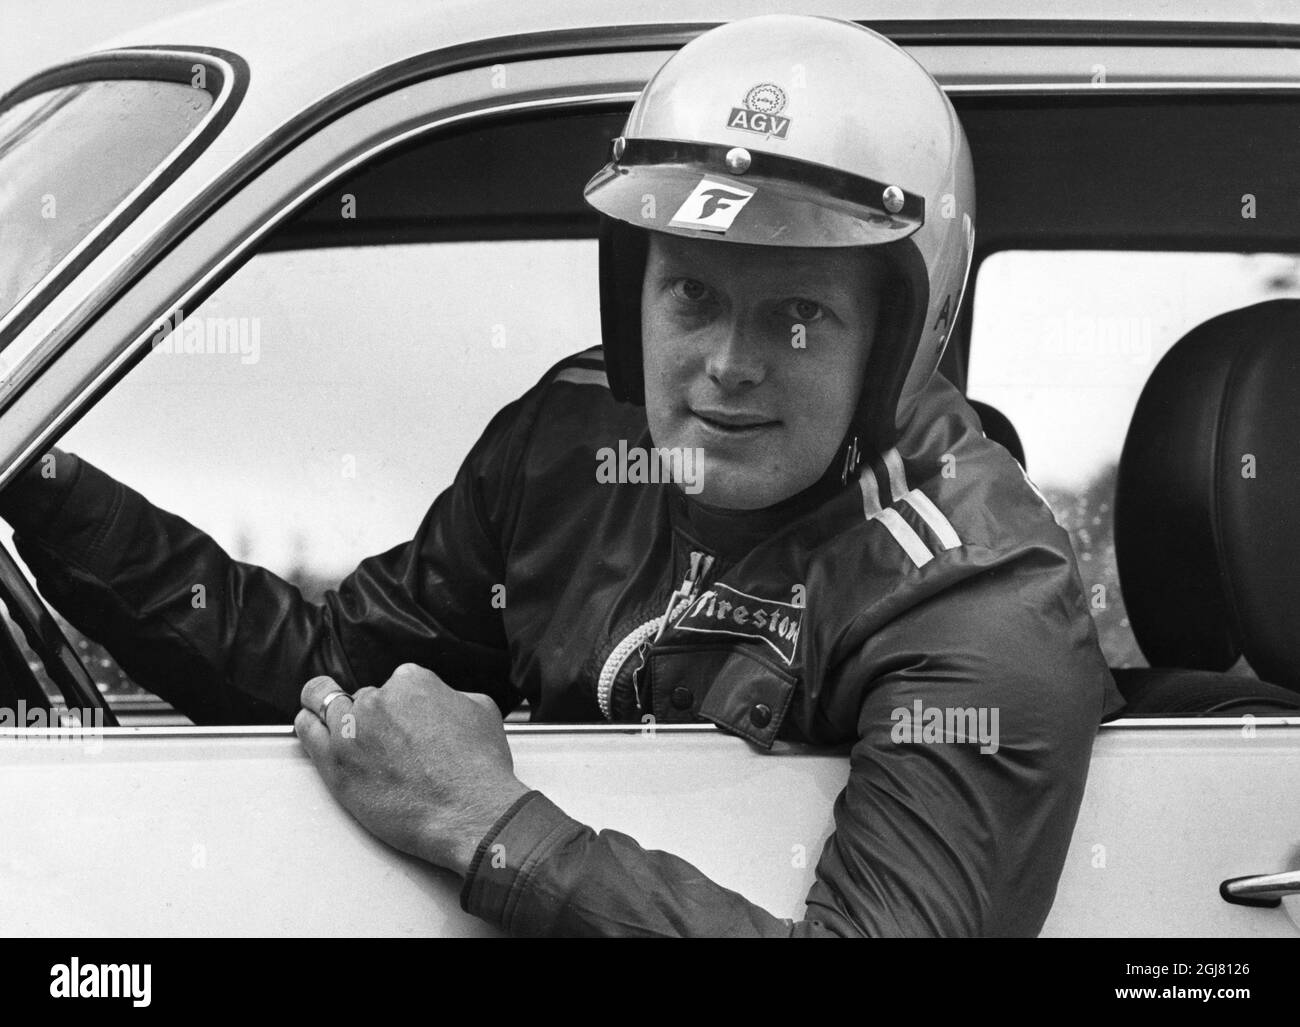 ARKIV 19730211. BjÃ¶rn WaldegÃ¥rd, rallyfÃ¶rare, sportens fÃ¶rste officielle vÃ¤rldsmÃ¤stare 1979. Foto: Olle Lindeborg / SCANPIX / Kod: 190 Stock Photo